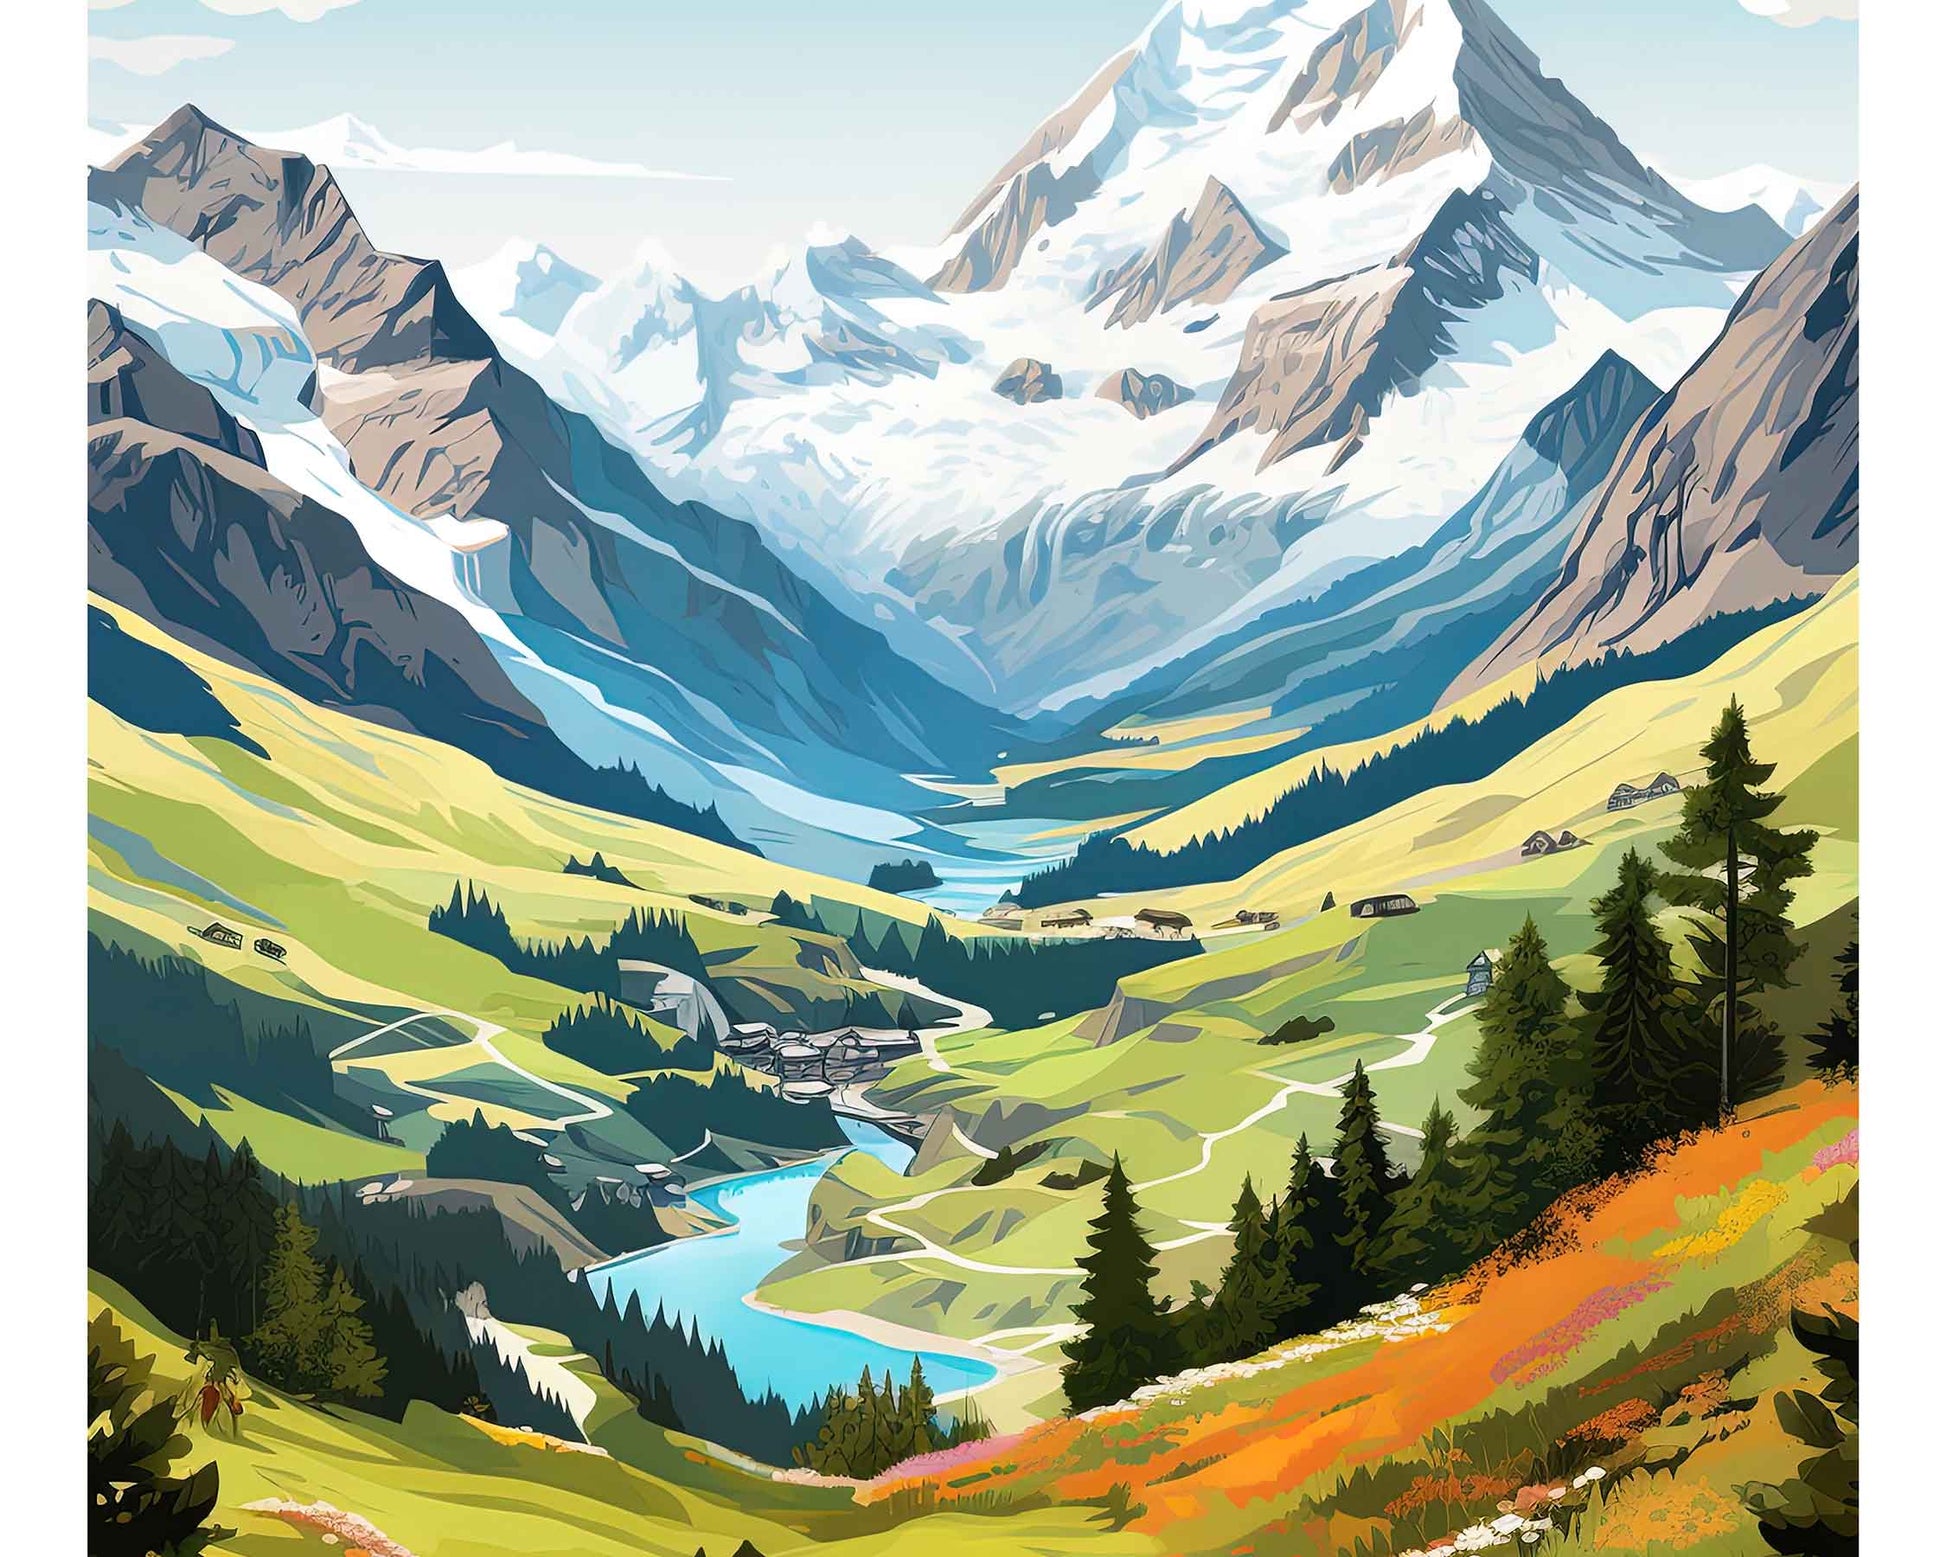 Framed Image of Swiss Alps Switzerland Travel Poster Illustration Prints Wall Art